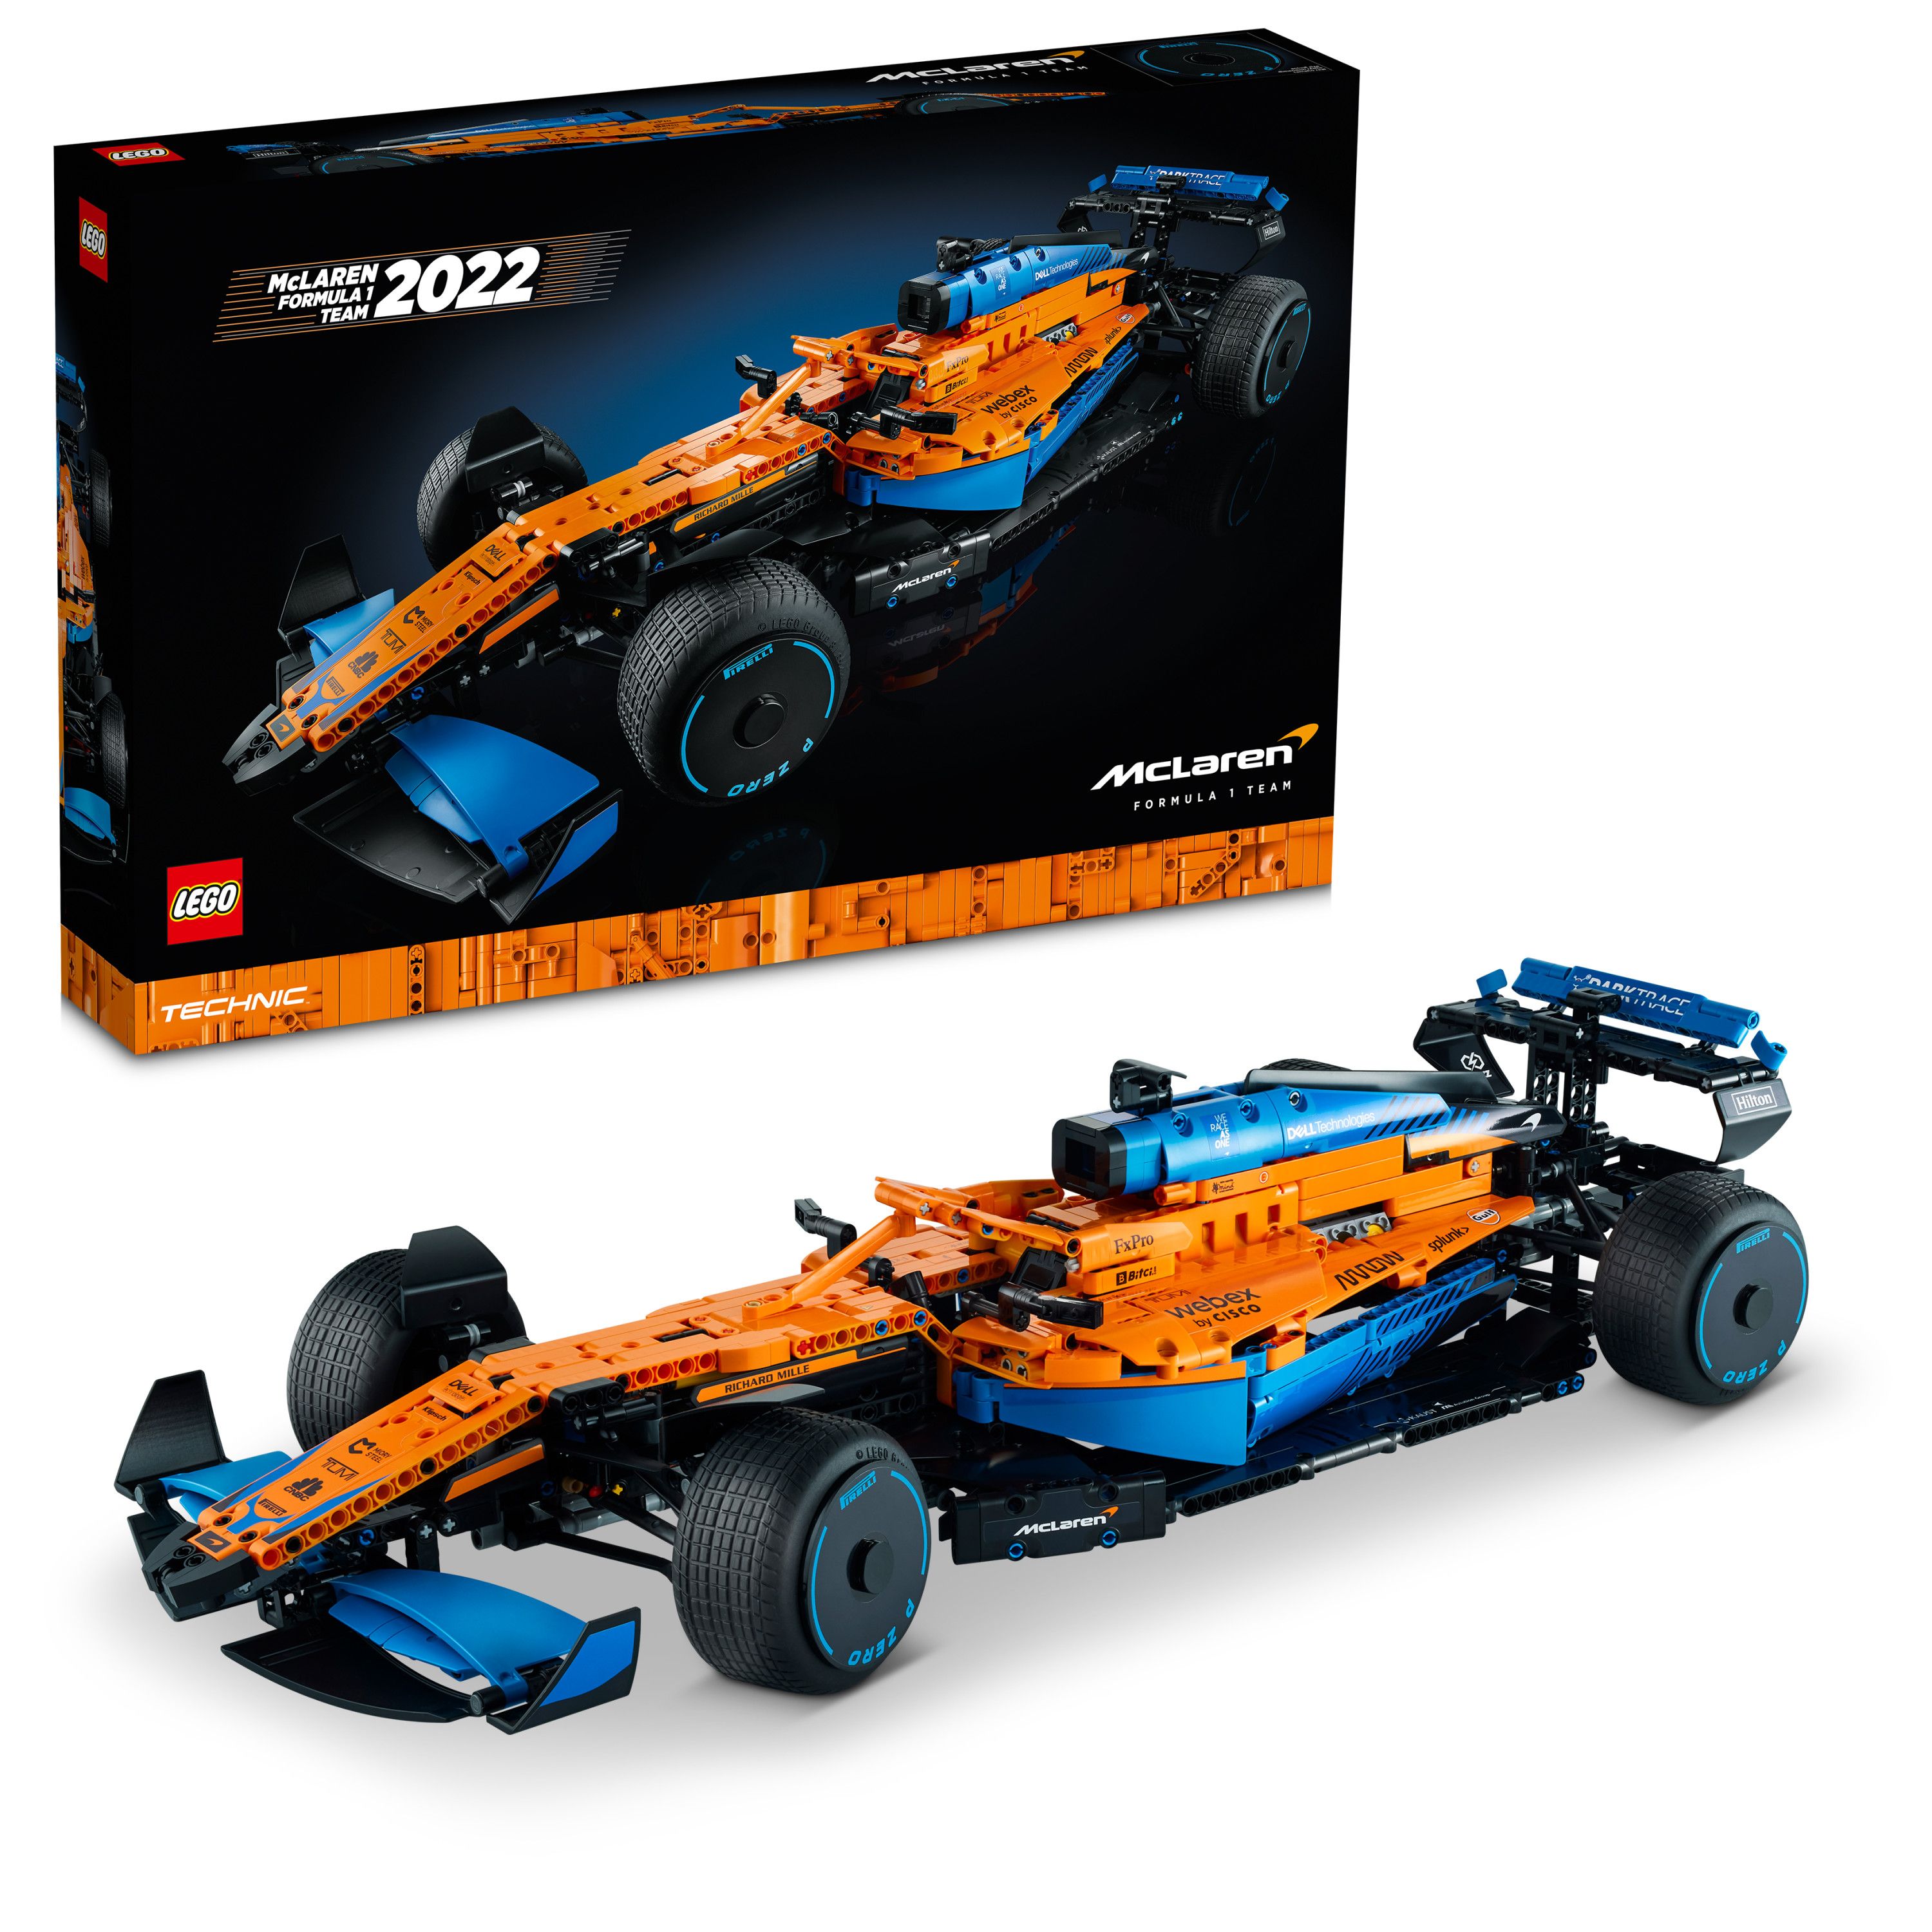 LEGO Technic McLaren Formula 1 Race Car 42141 Model Building Kit for Adults; Build a Replica Model of the 2022 McLaren Formula 1 Race Car (1,432 Pieces)